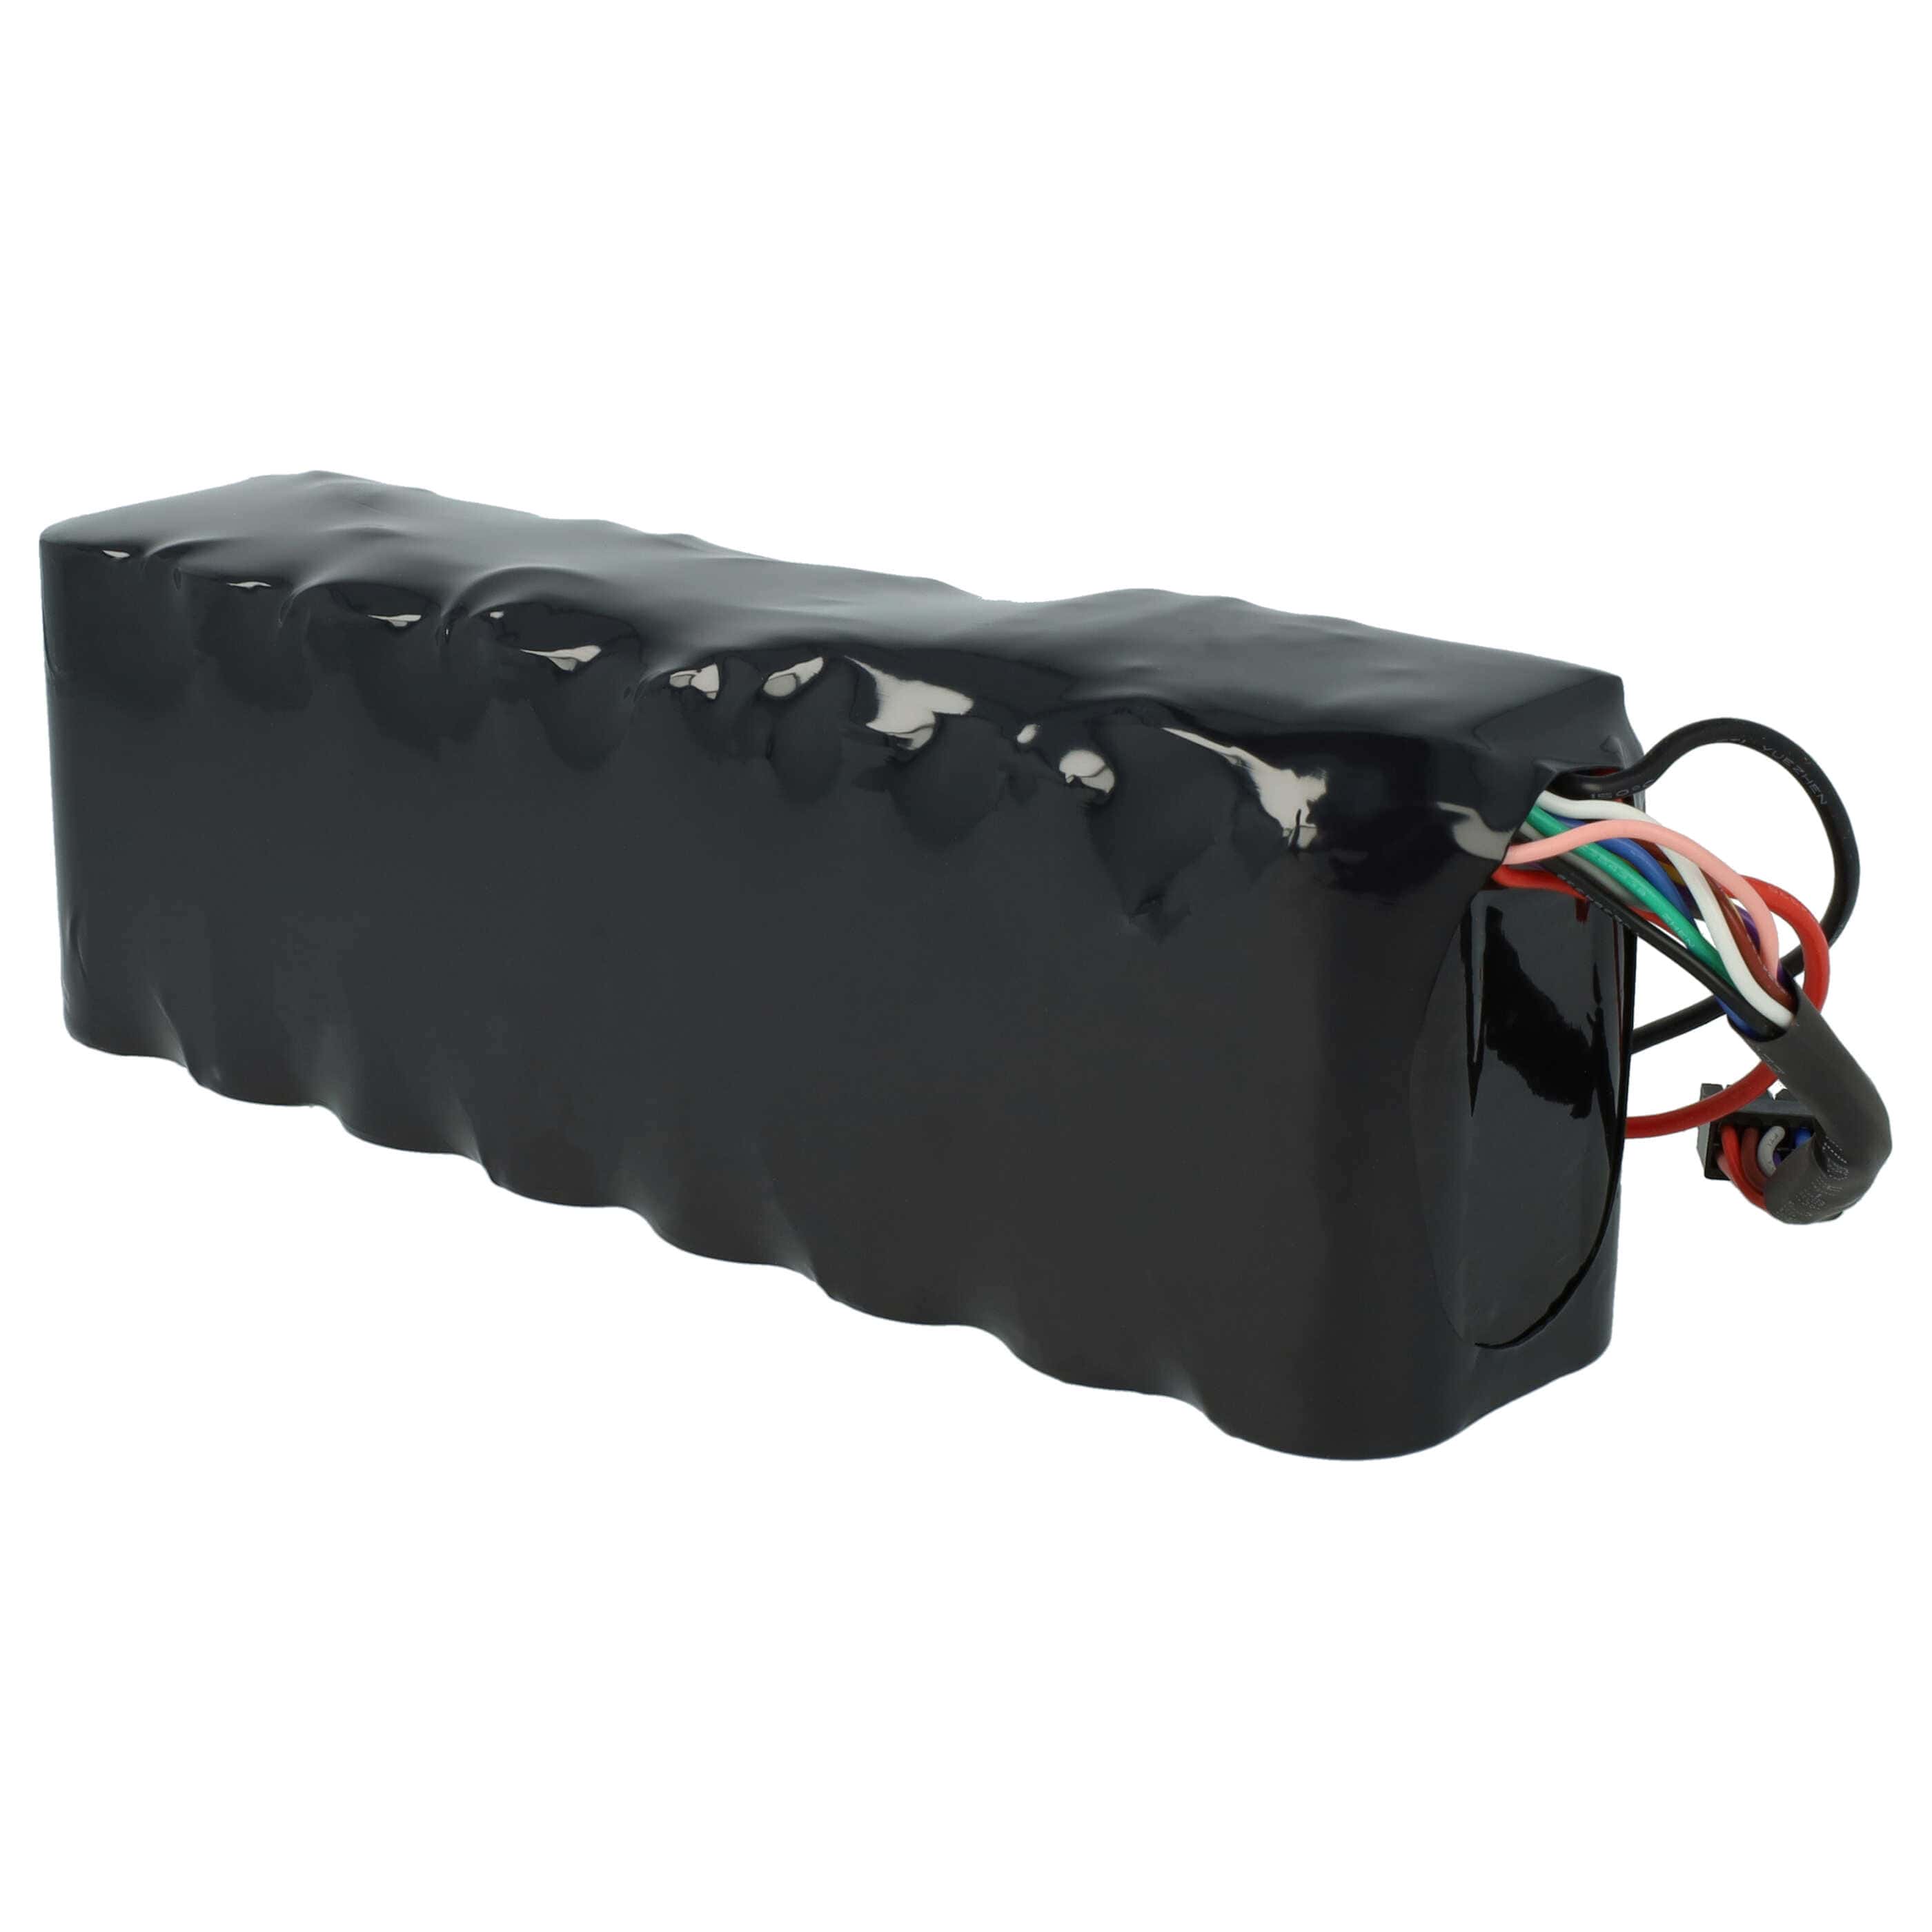 Lawnmower Battery Replacement for MRK6103A, MRK6105A, BAT6001B, BAT6000A, BAT6000C - 8000mAh 25.6V Li-Ion